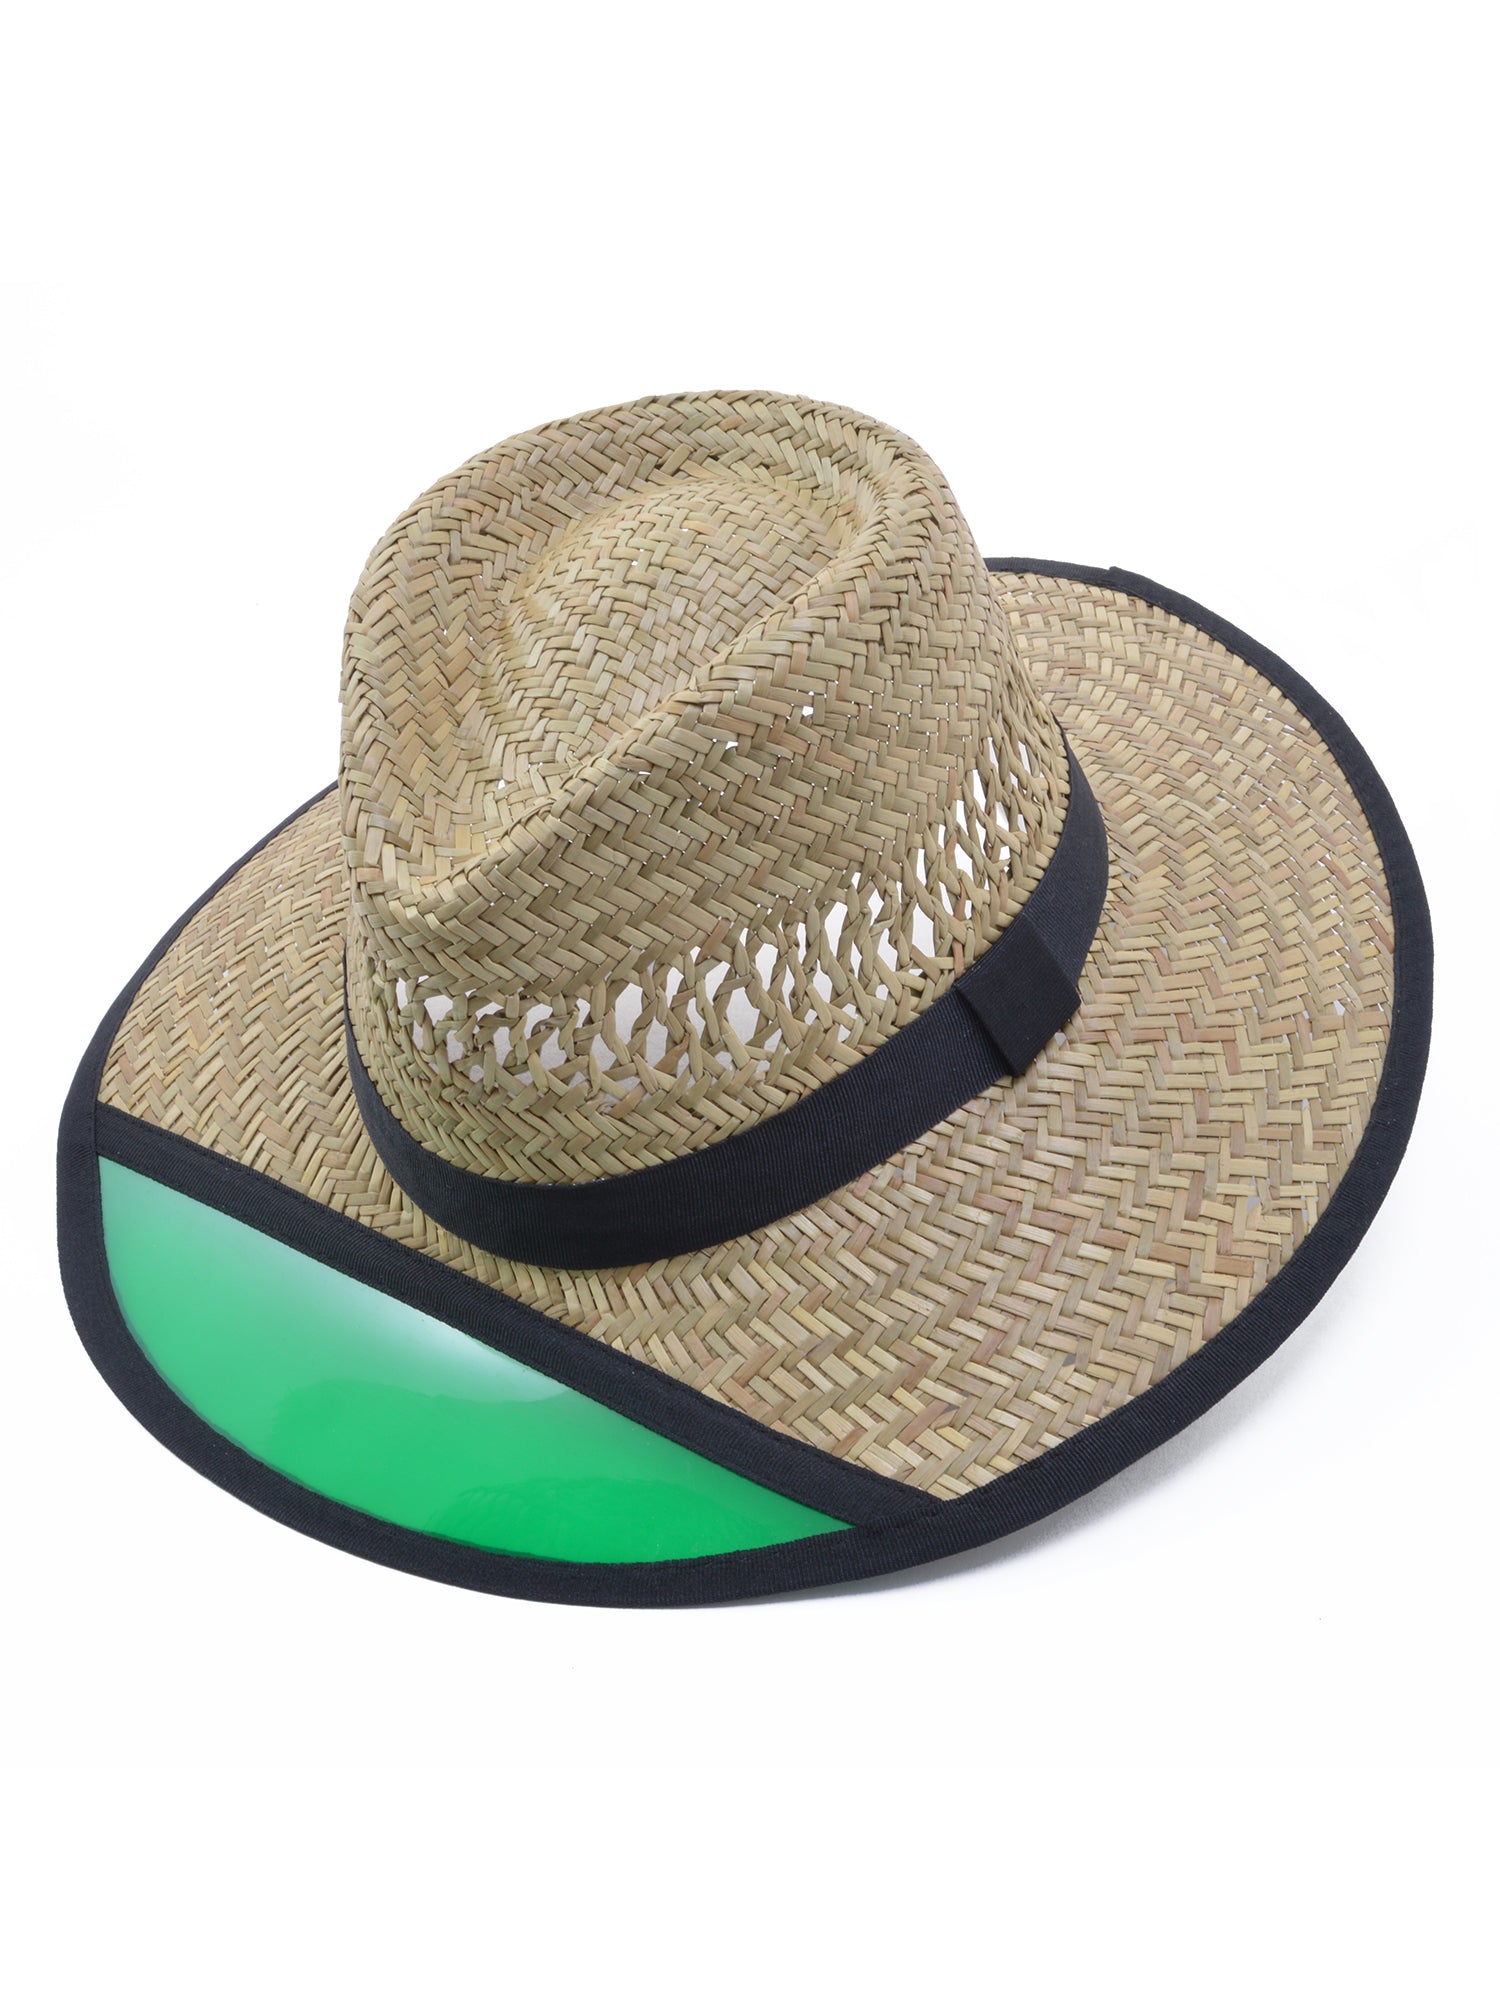 Turner Straw Hat with Green Visor